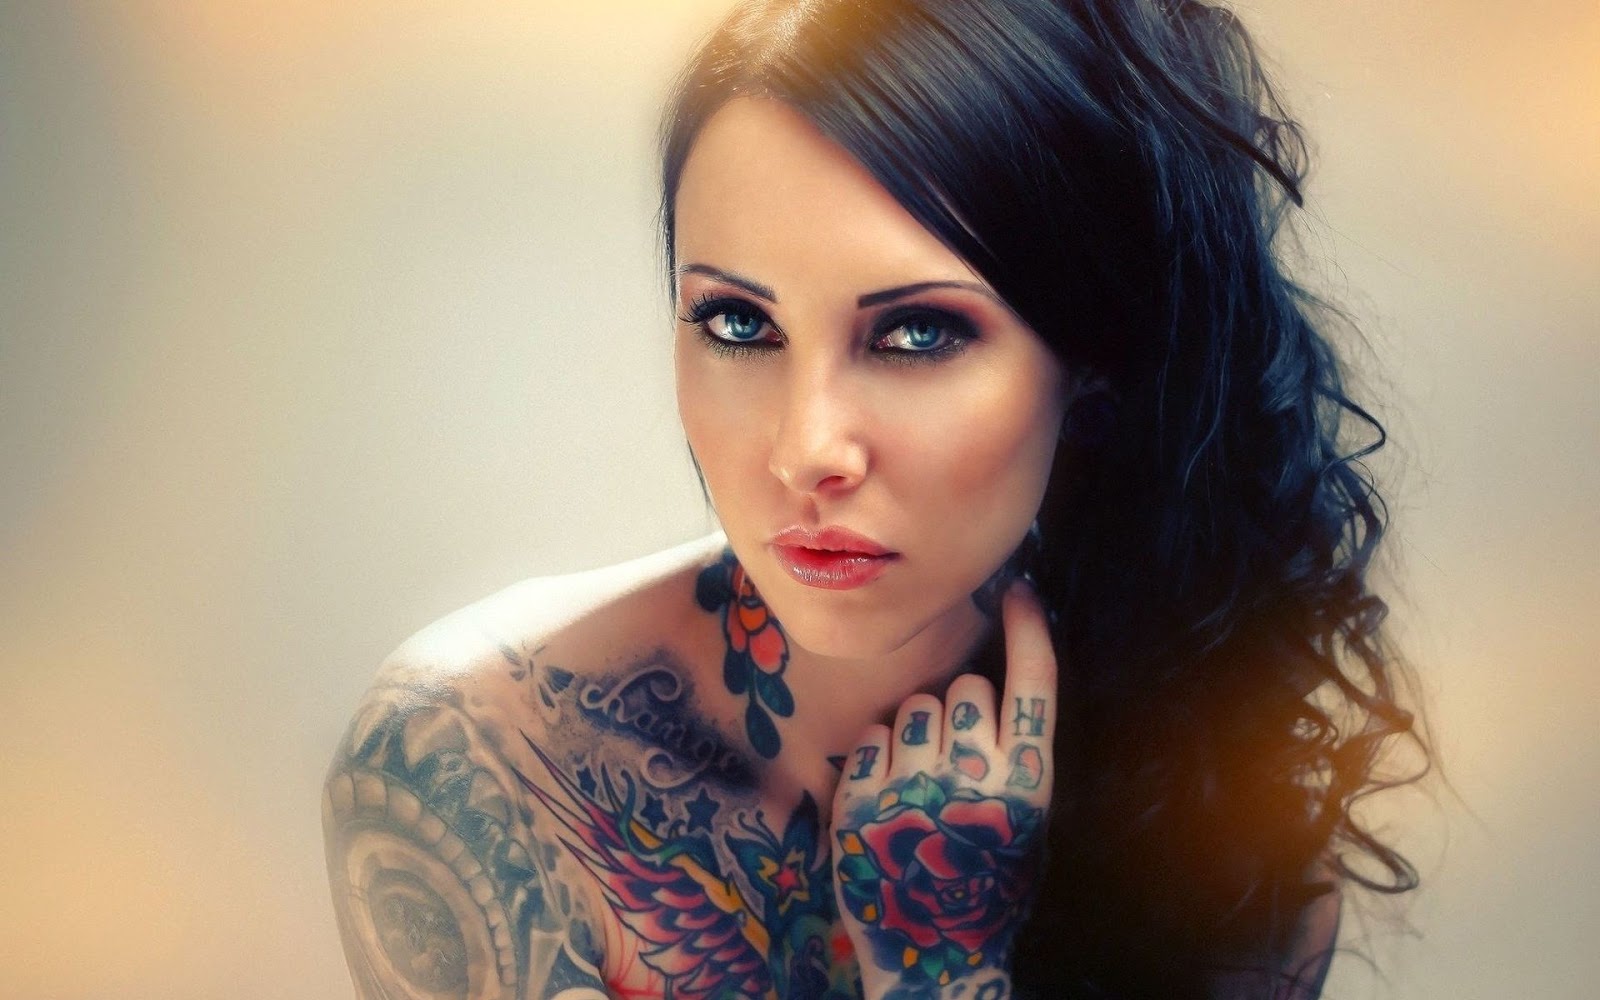 hot tattoo girl wallpaper,hair,face,eyebrow,lip,shoulder